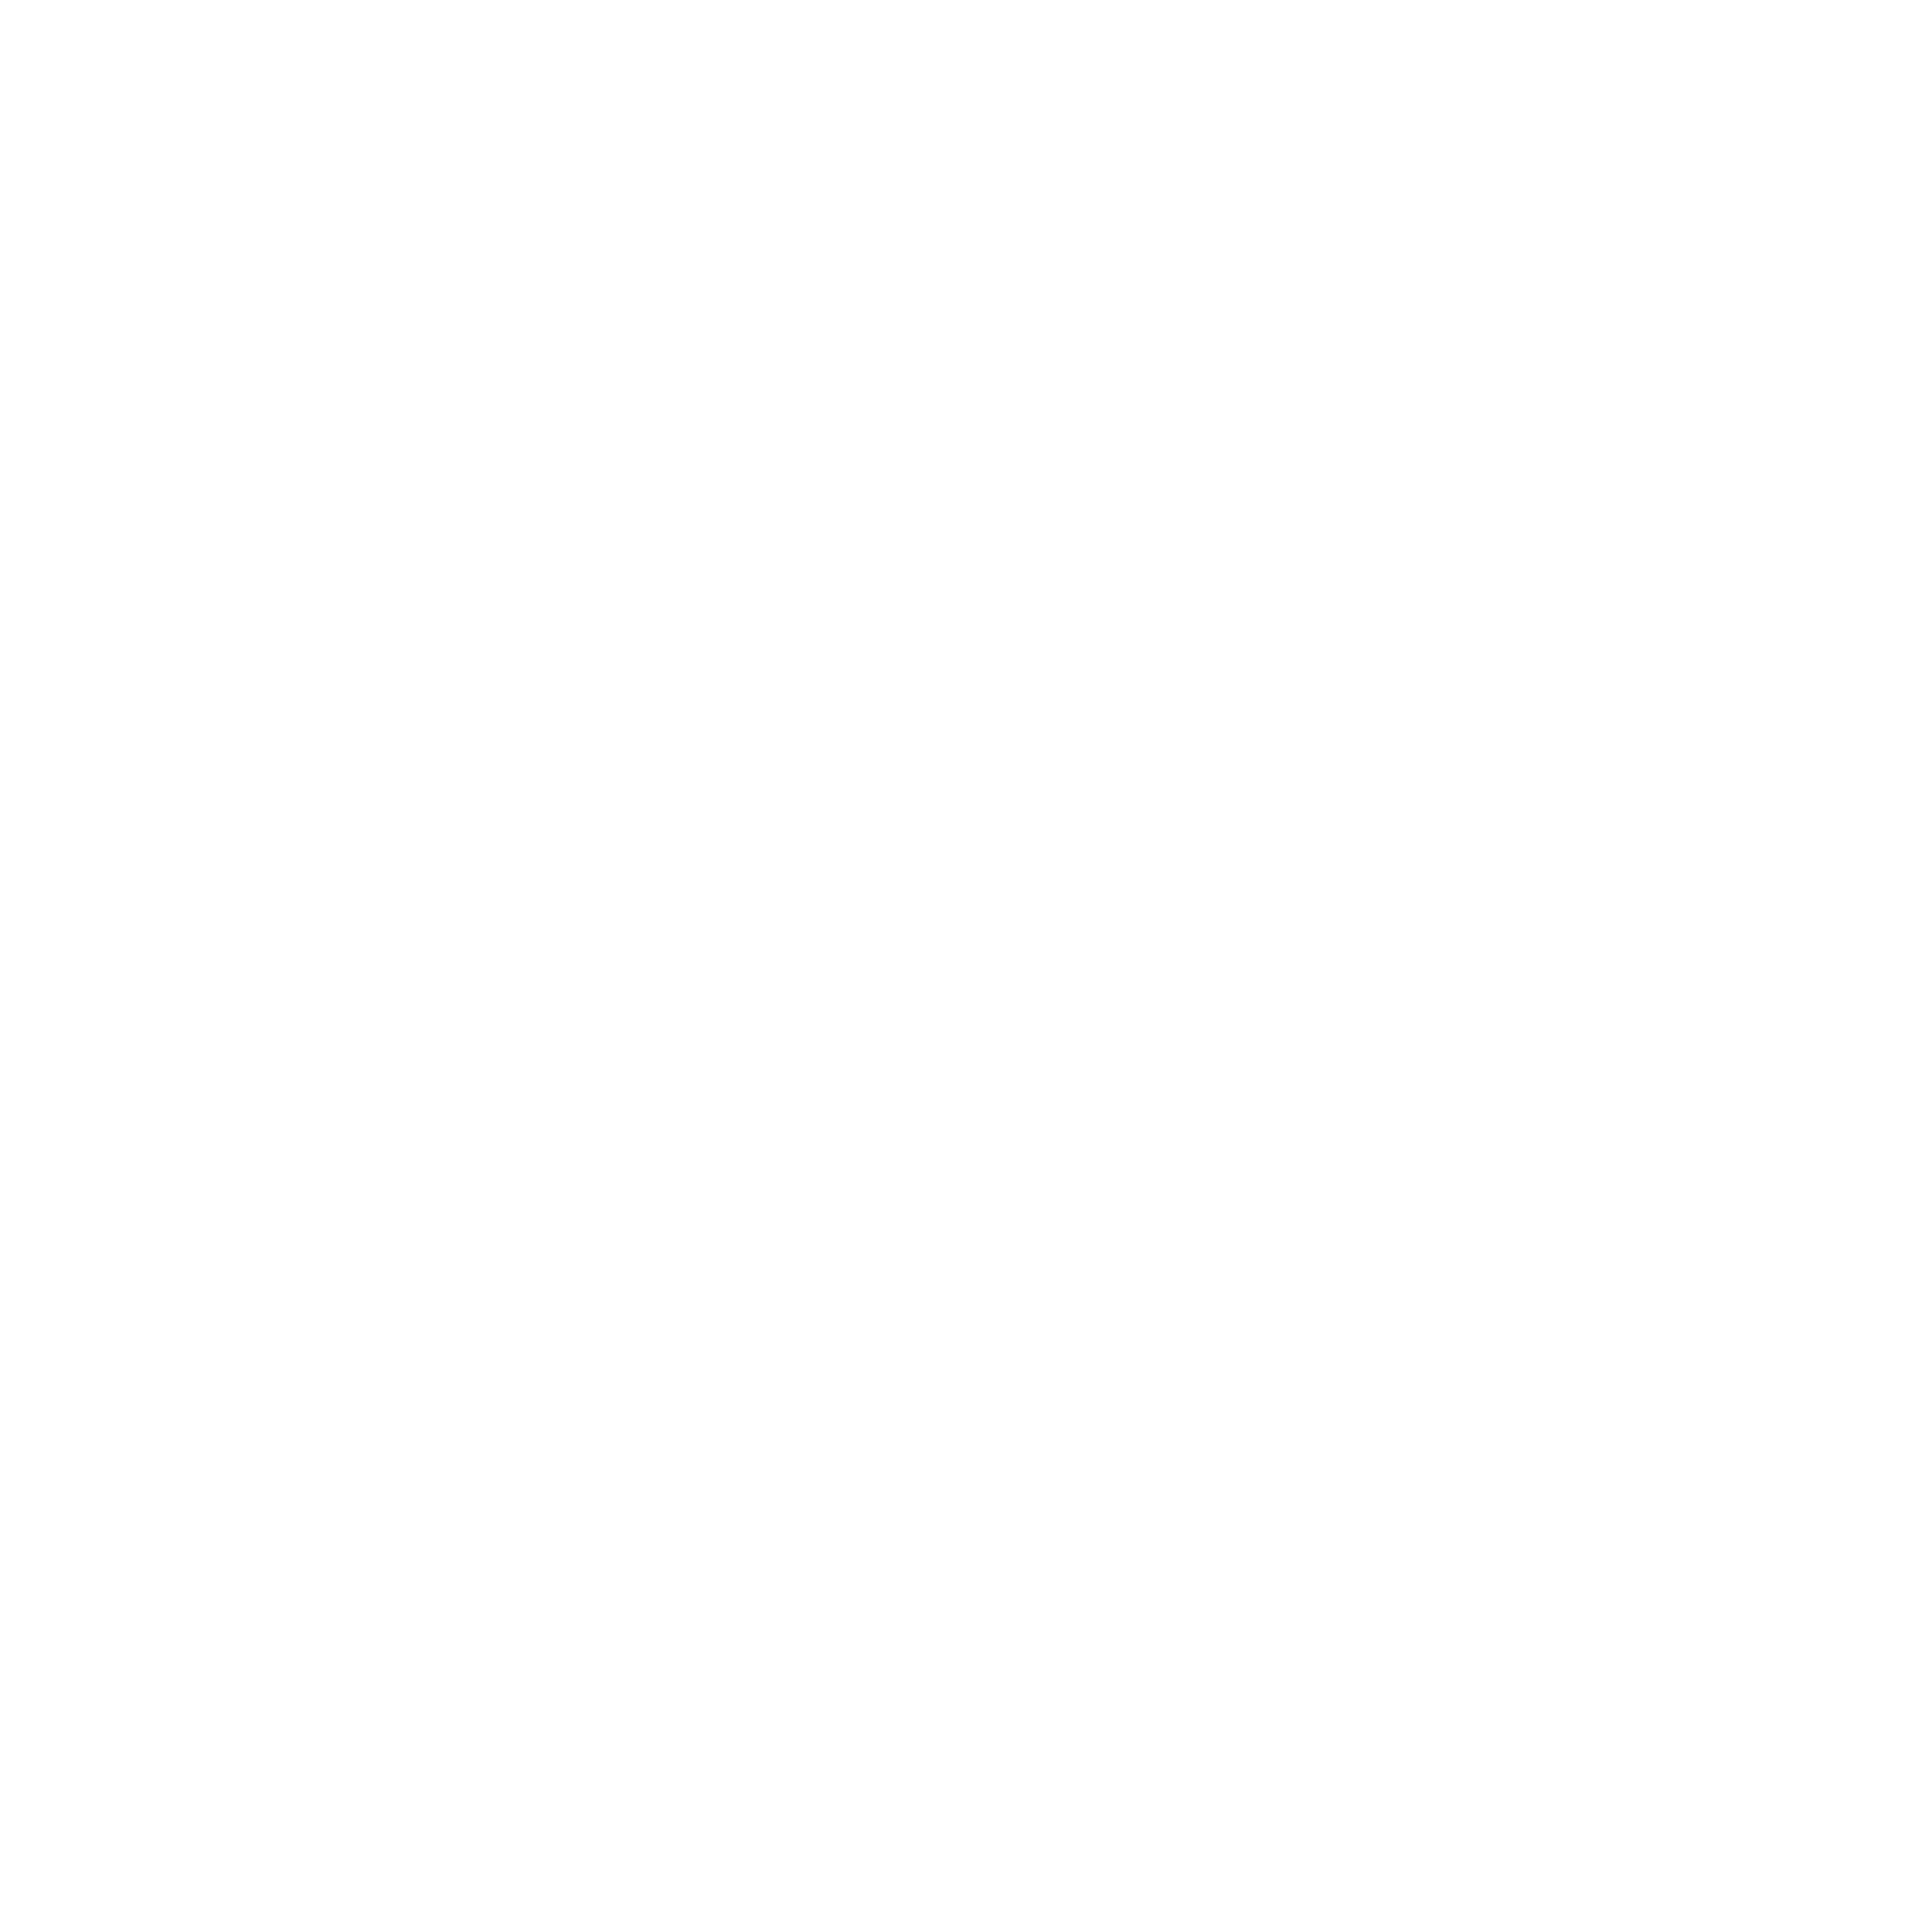 Perception Grid